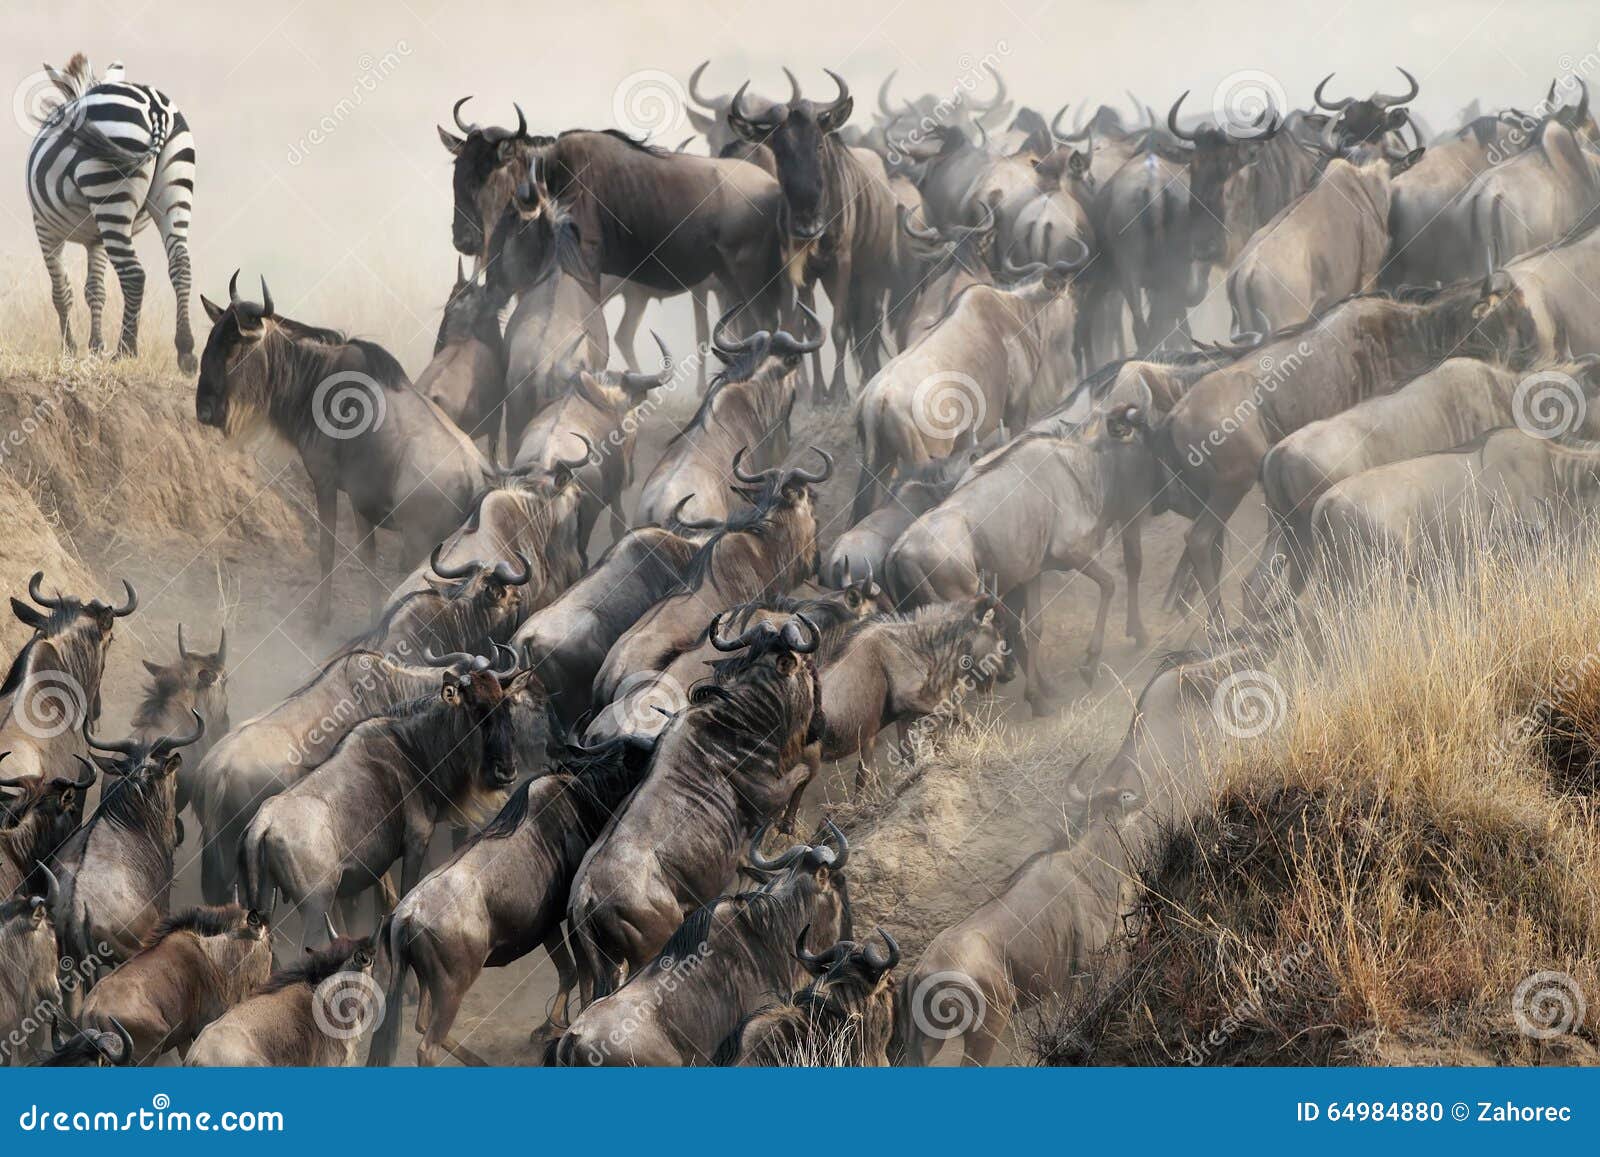 migration of wildebeest